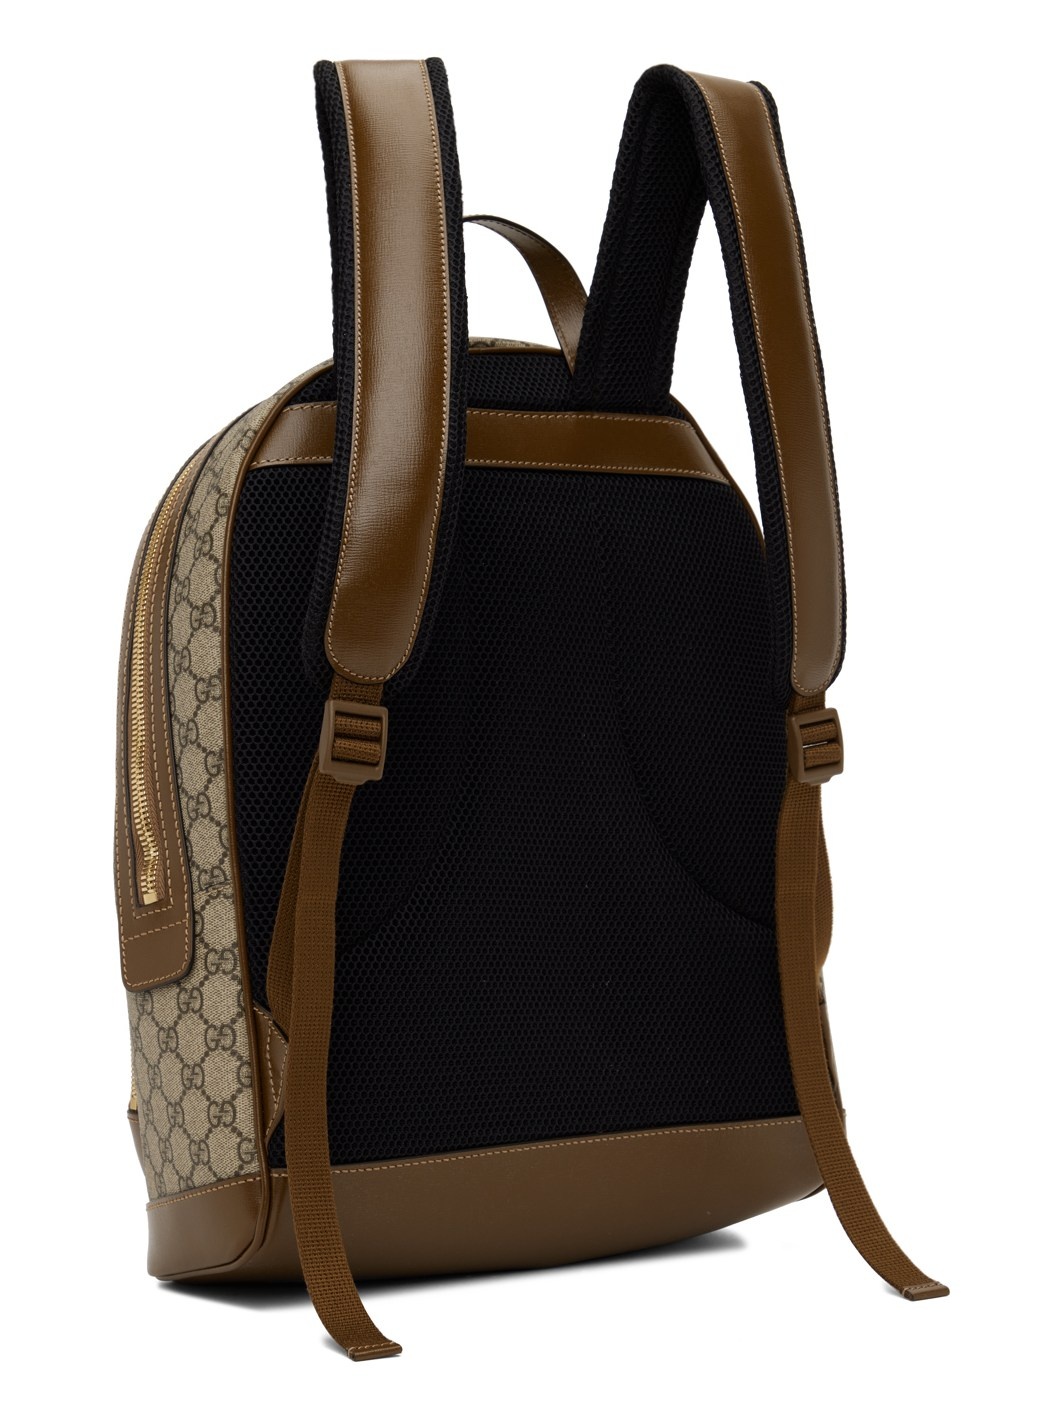 Beige & Brown GG Supreme Backpack - 3